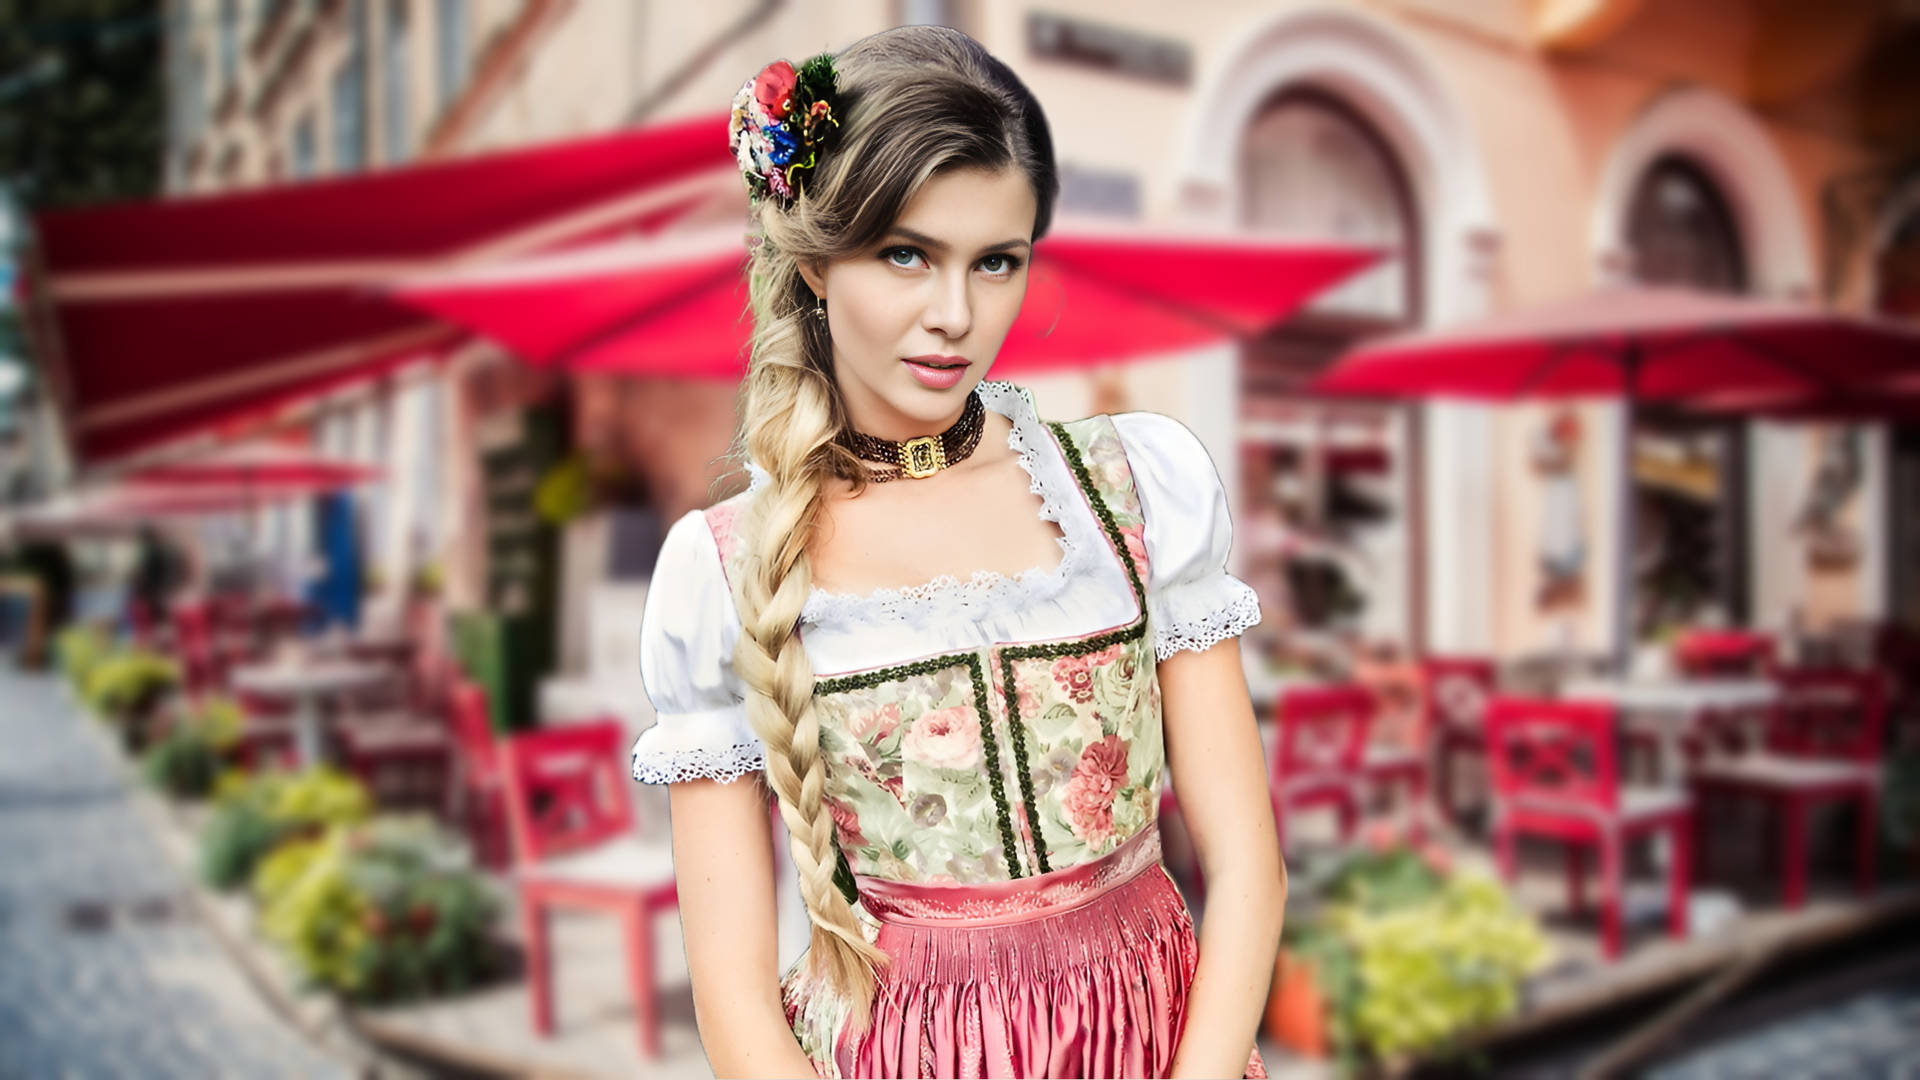 Elegant Woman In Traditional Dirndl Dress Celebrating Oktoberfest